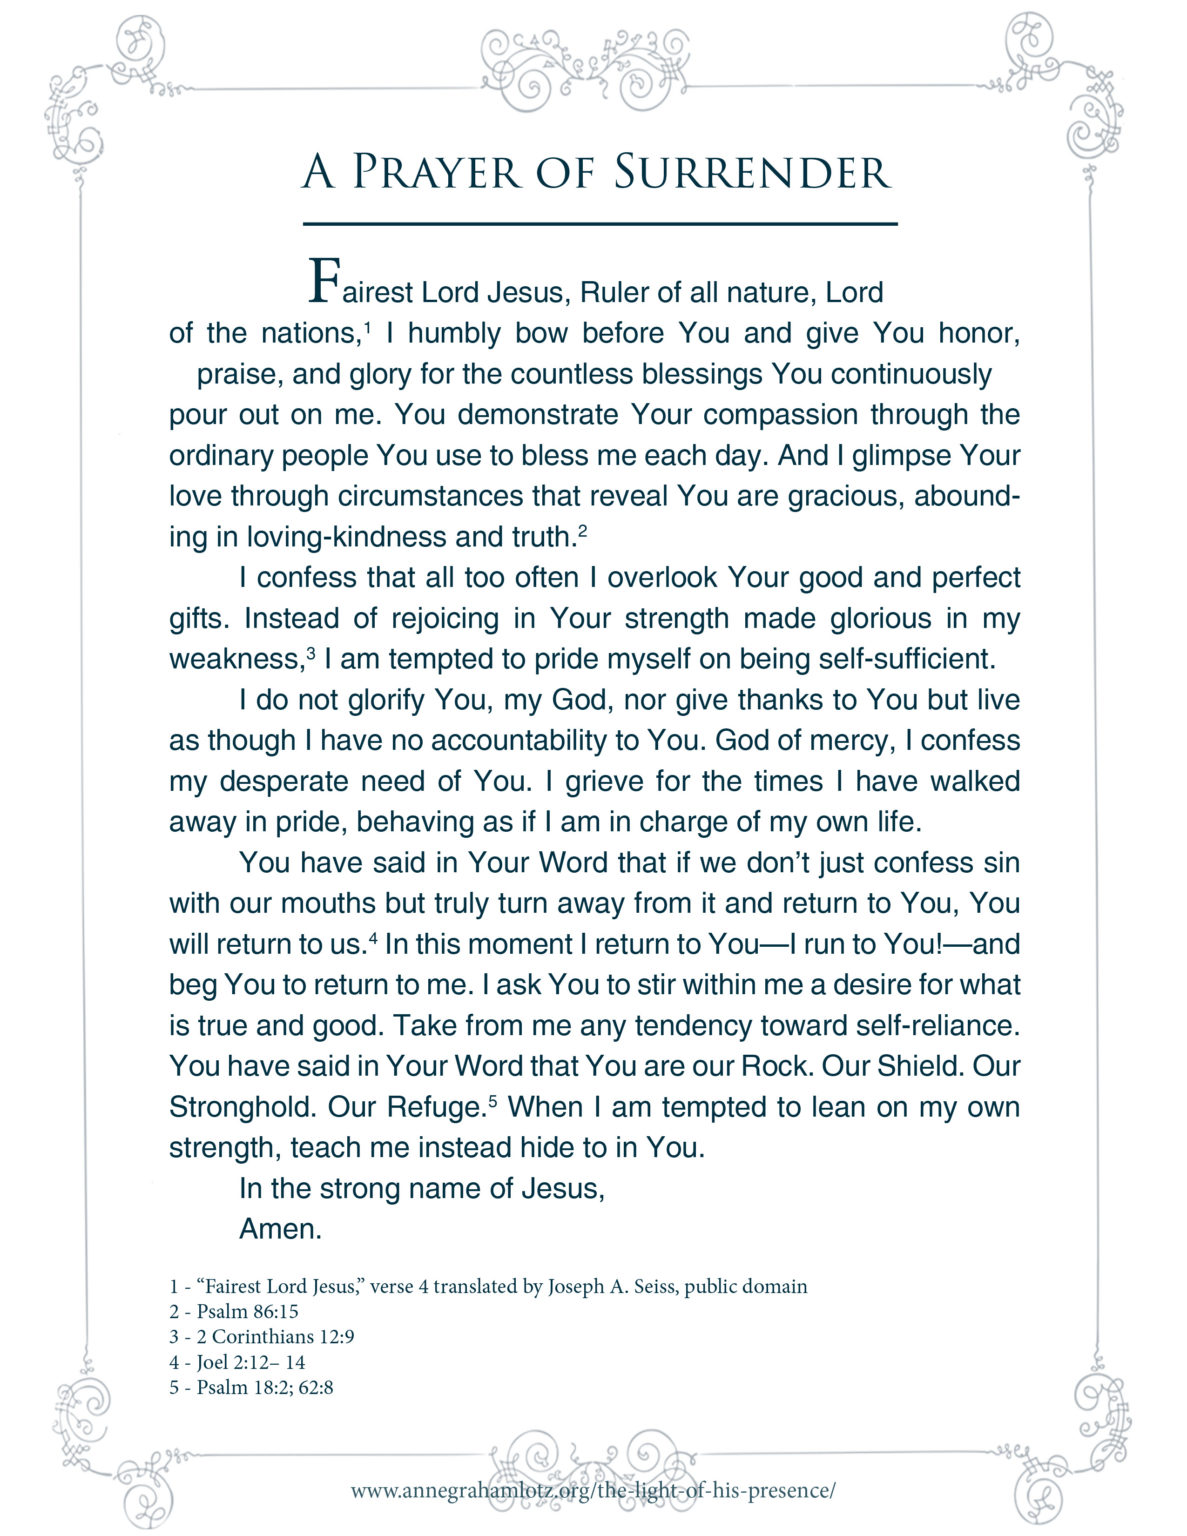 A Prayer of Surrender | Anne Graham Lotz - Angel Ministries